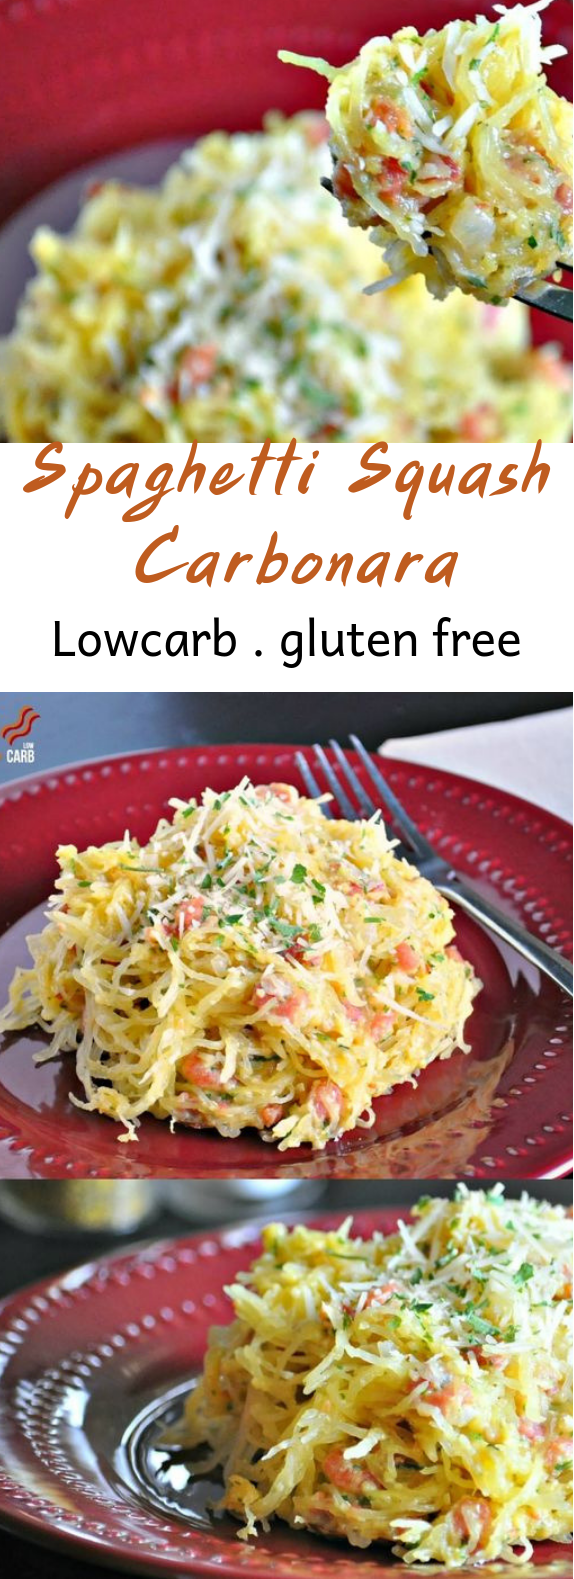 SPAGHETTI SQUASH CARBONARA – LOW CARB, GLUTEN FREE #lowcarb #glutenfree